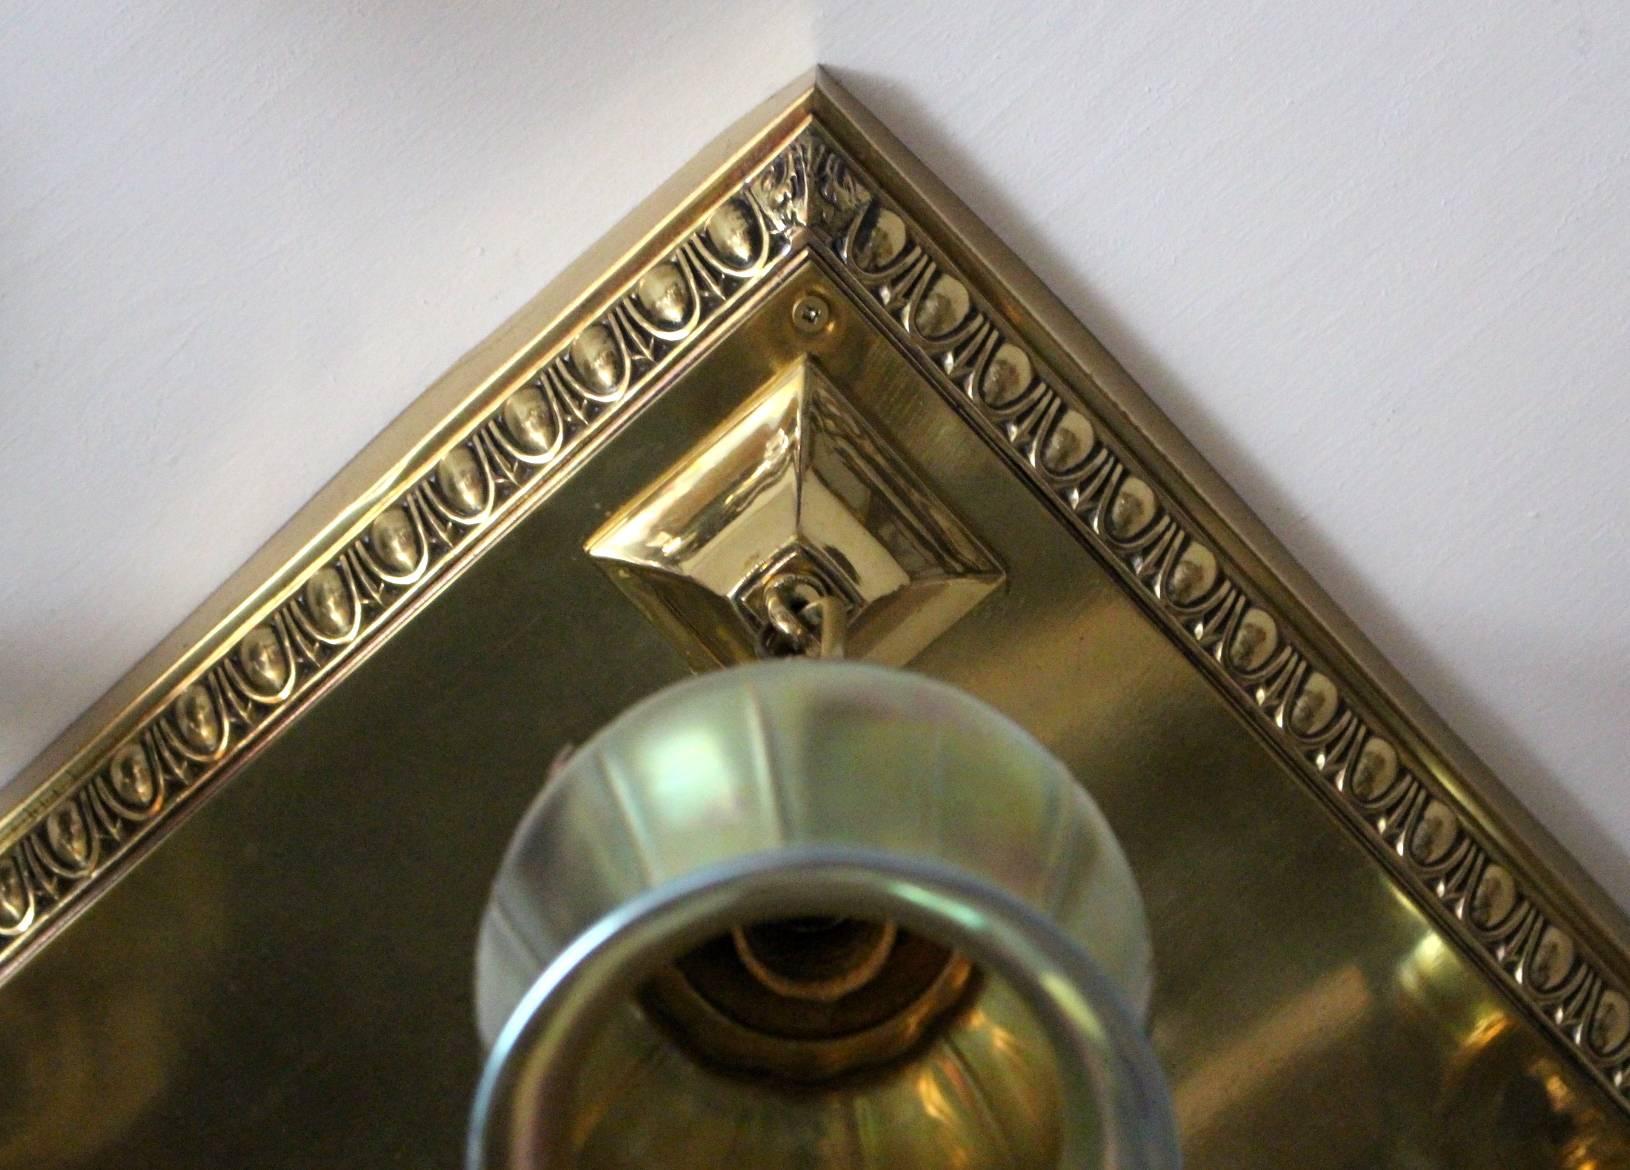 Original polished brass flush mount with antique art glass shades.

Measurements: 19